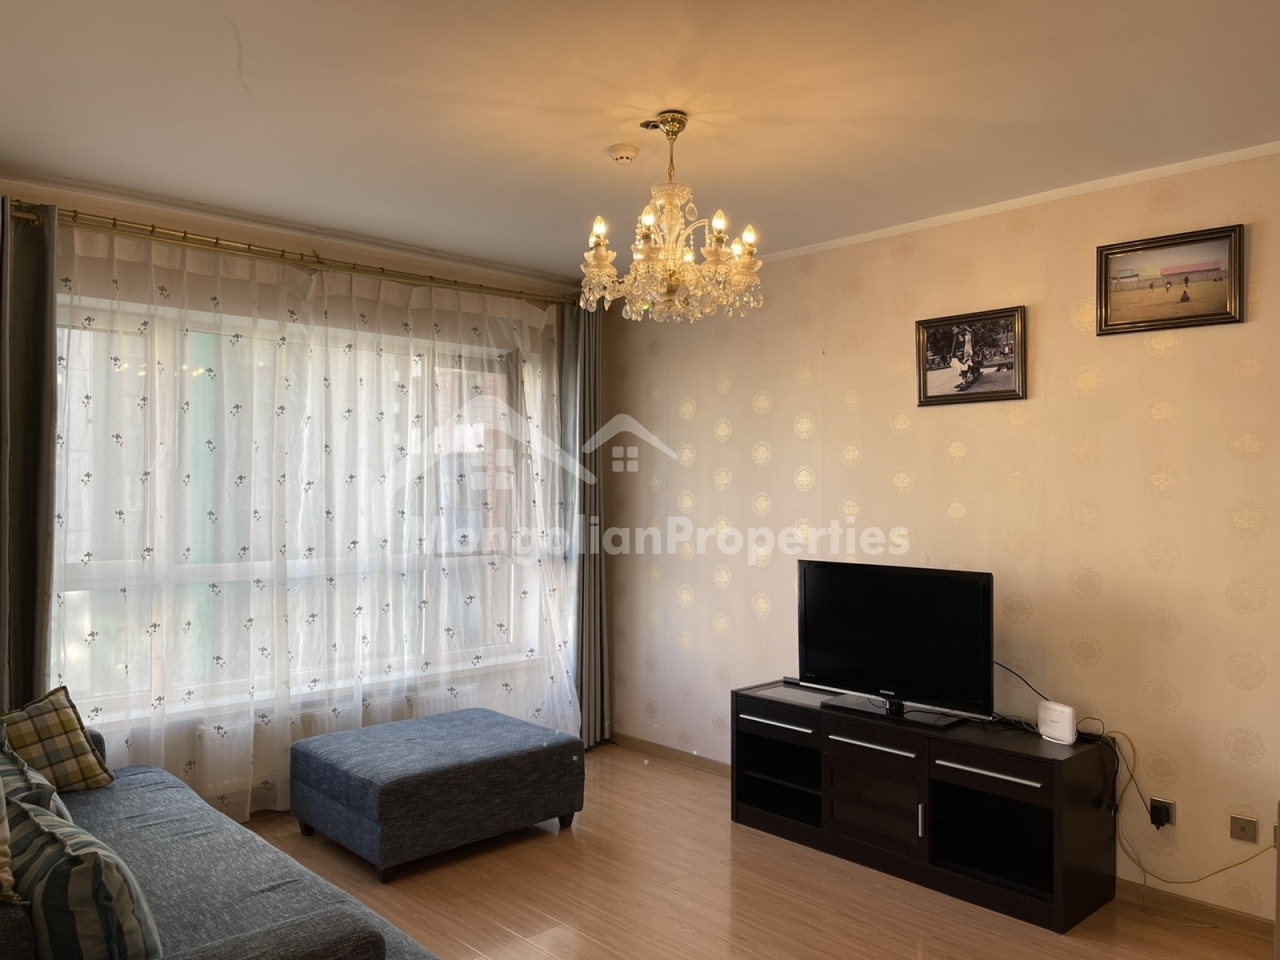 FOR RENT : 2 bedroom apartment at Nalrah Urguu 